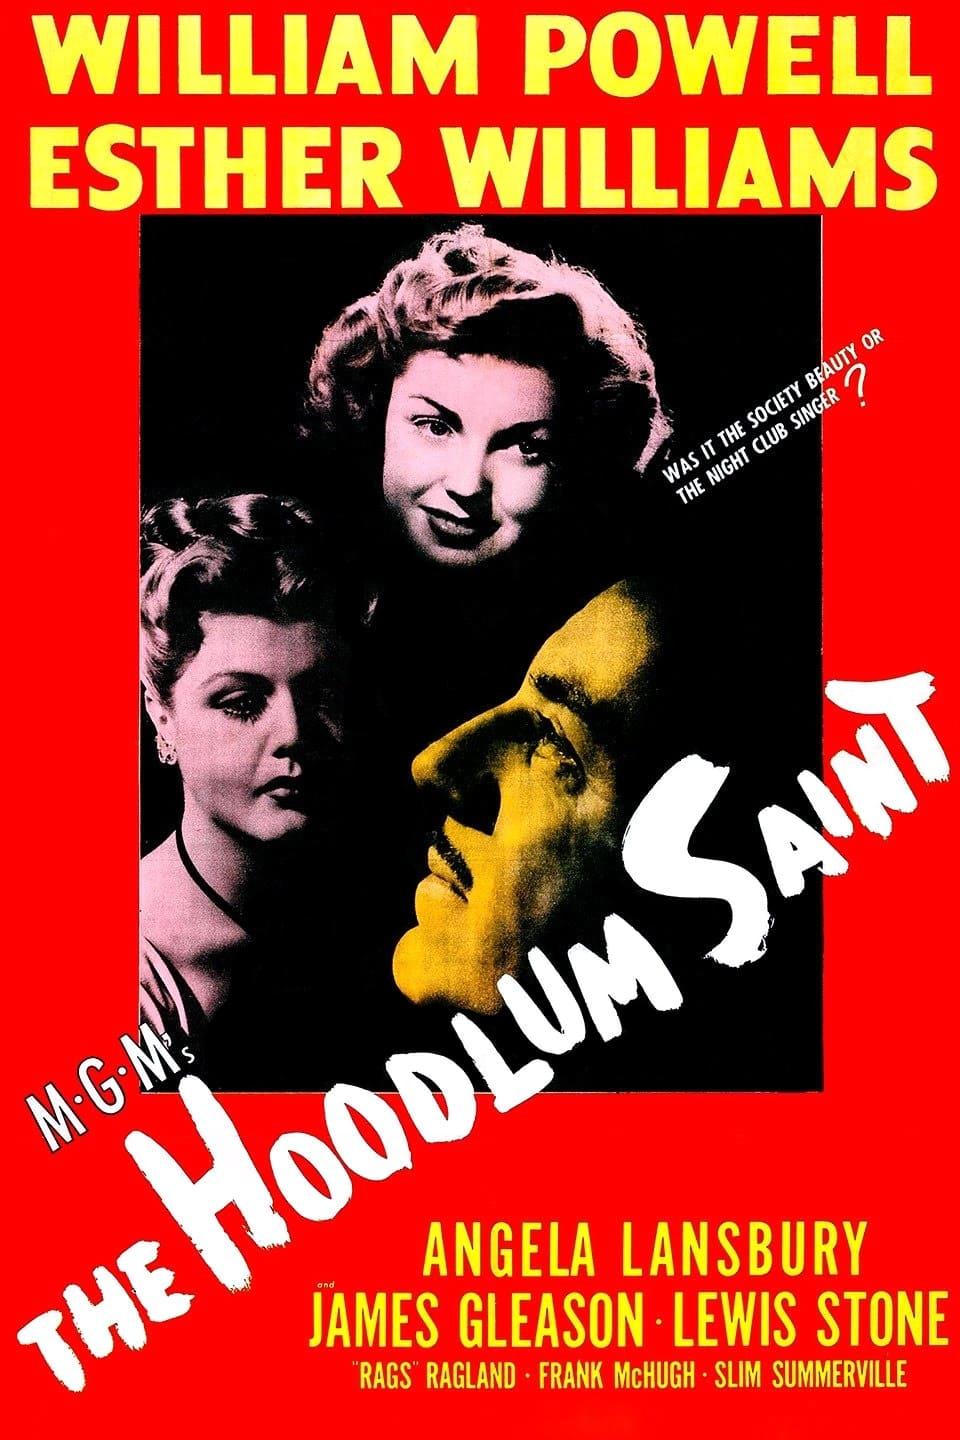 The Hoodlum Saint poster